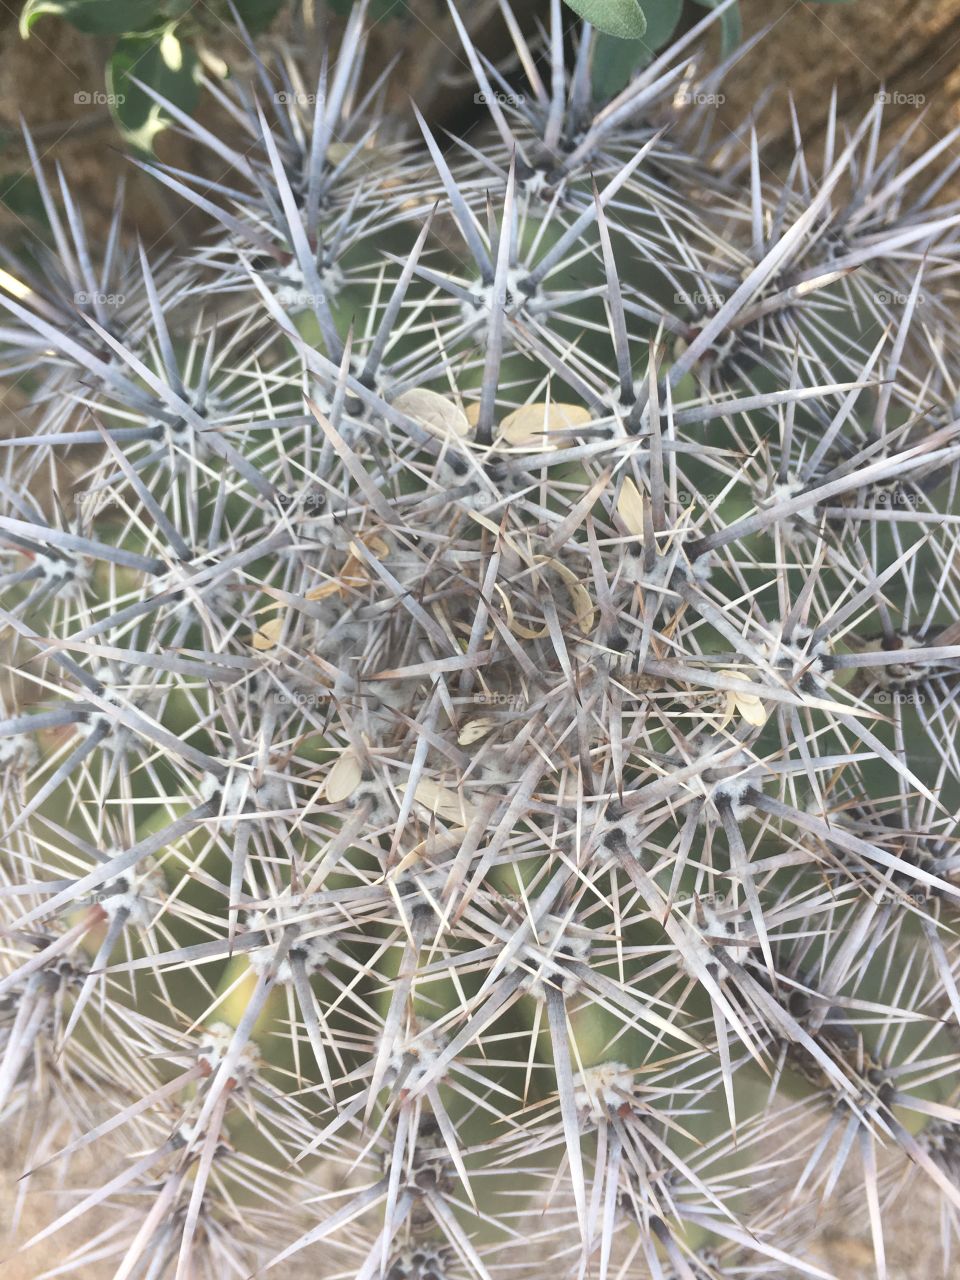 Saguaro National Park, Tucson AZ barrel cactus 